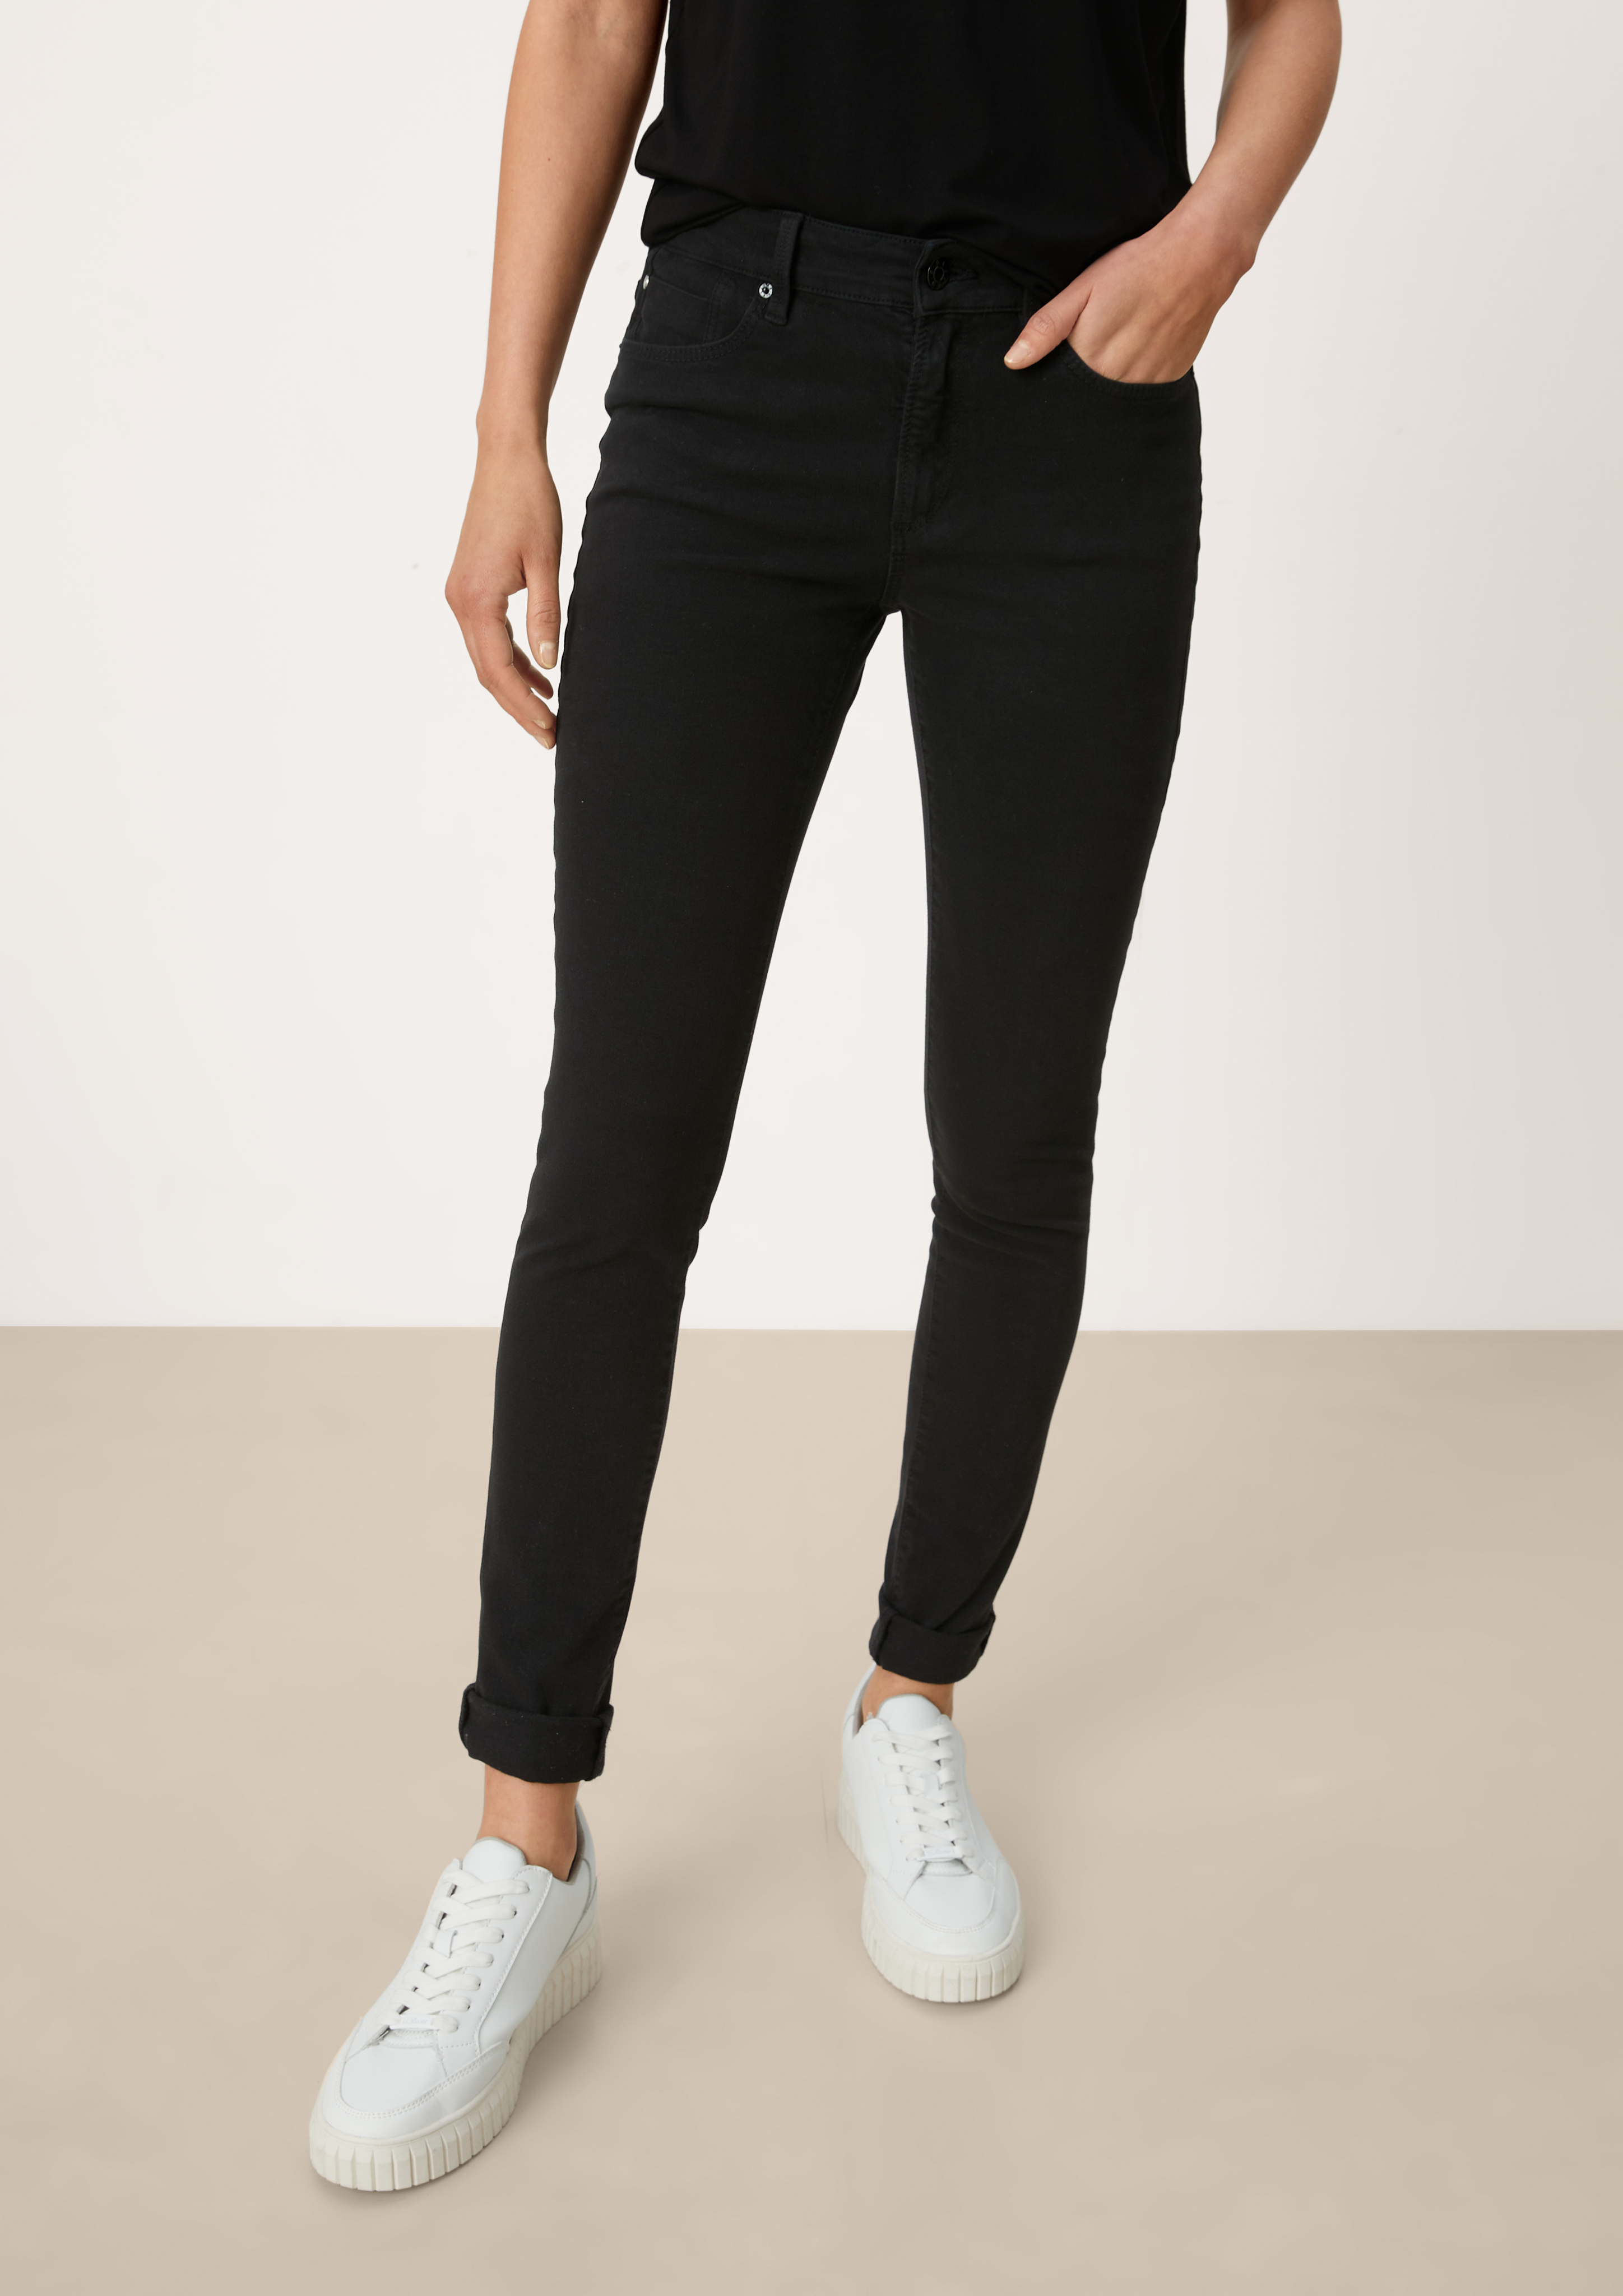 Izabell jeans / skinny fit / mid rise / skinny leg - black